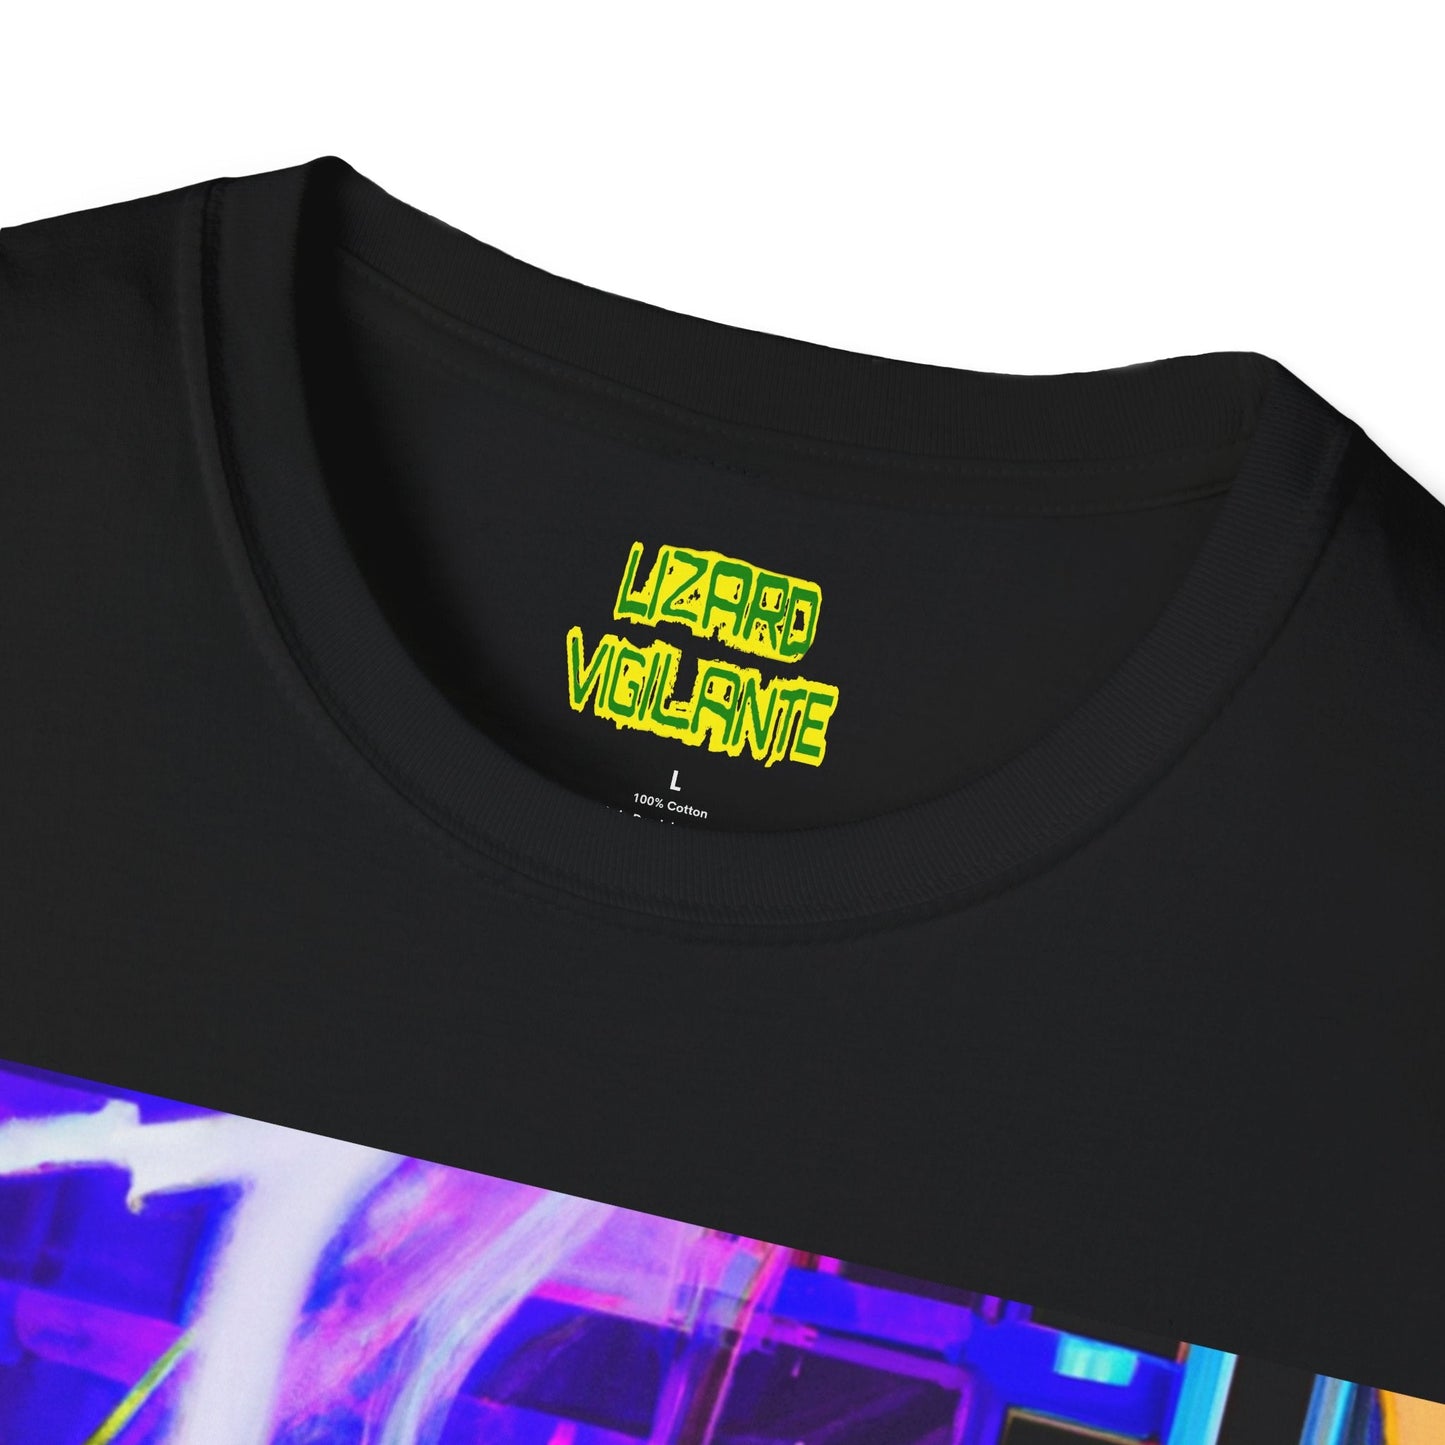 Electric Lizard Vigilante Unisex Softstyle T-Shirt - Lizard Vigilante